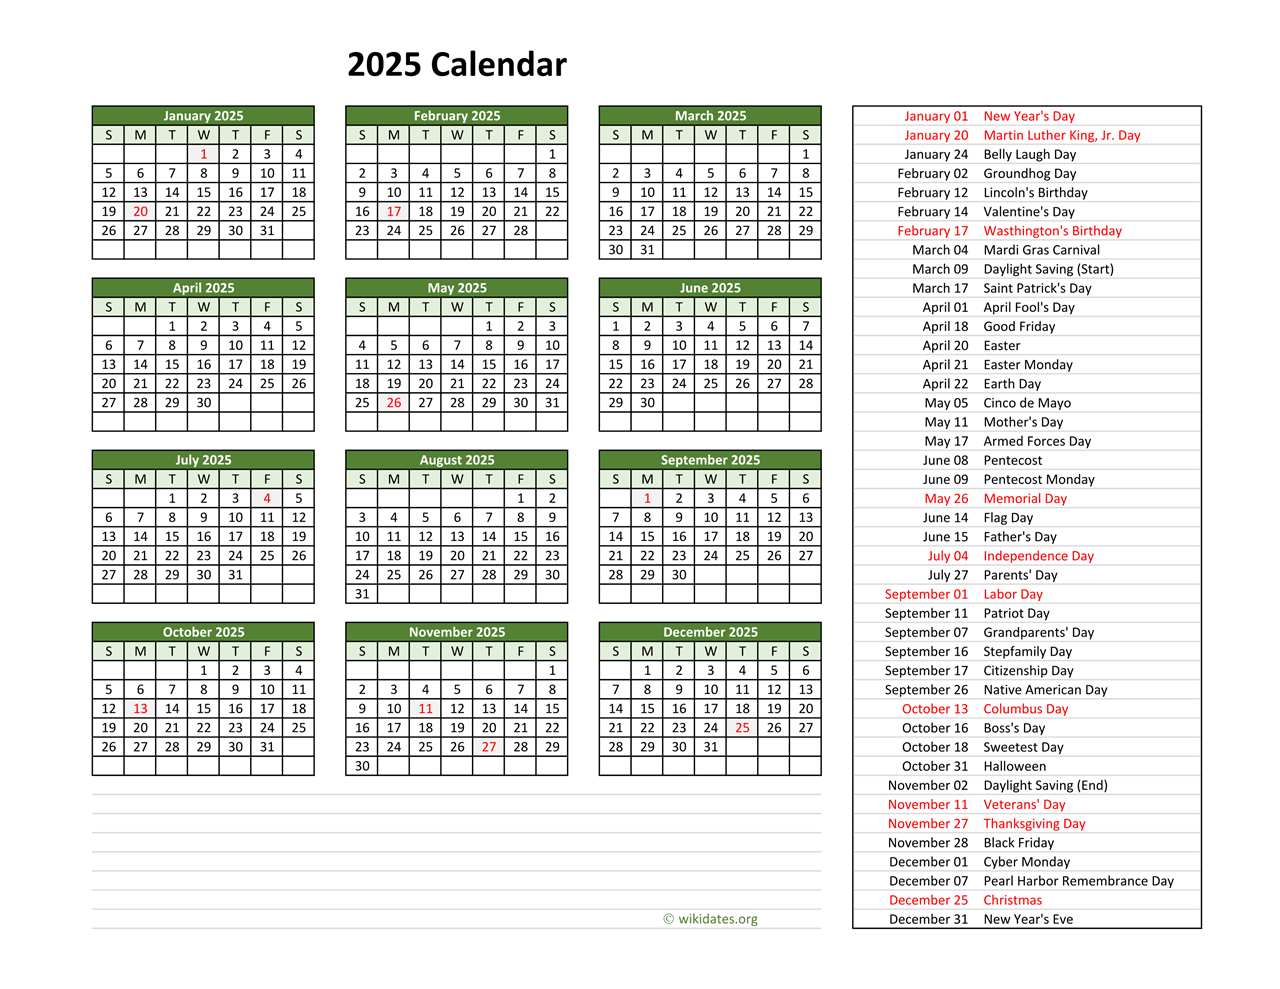 2025 Calendar With US Holidays WikiDates